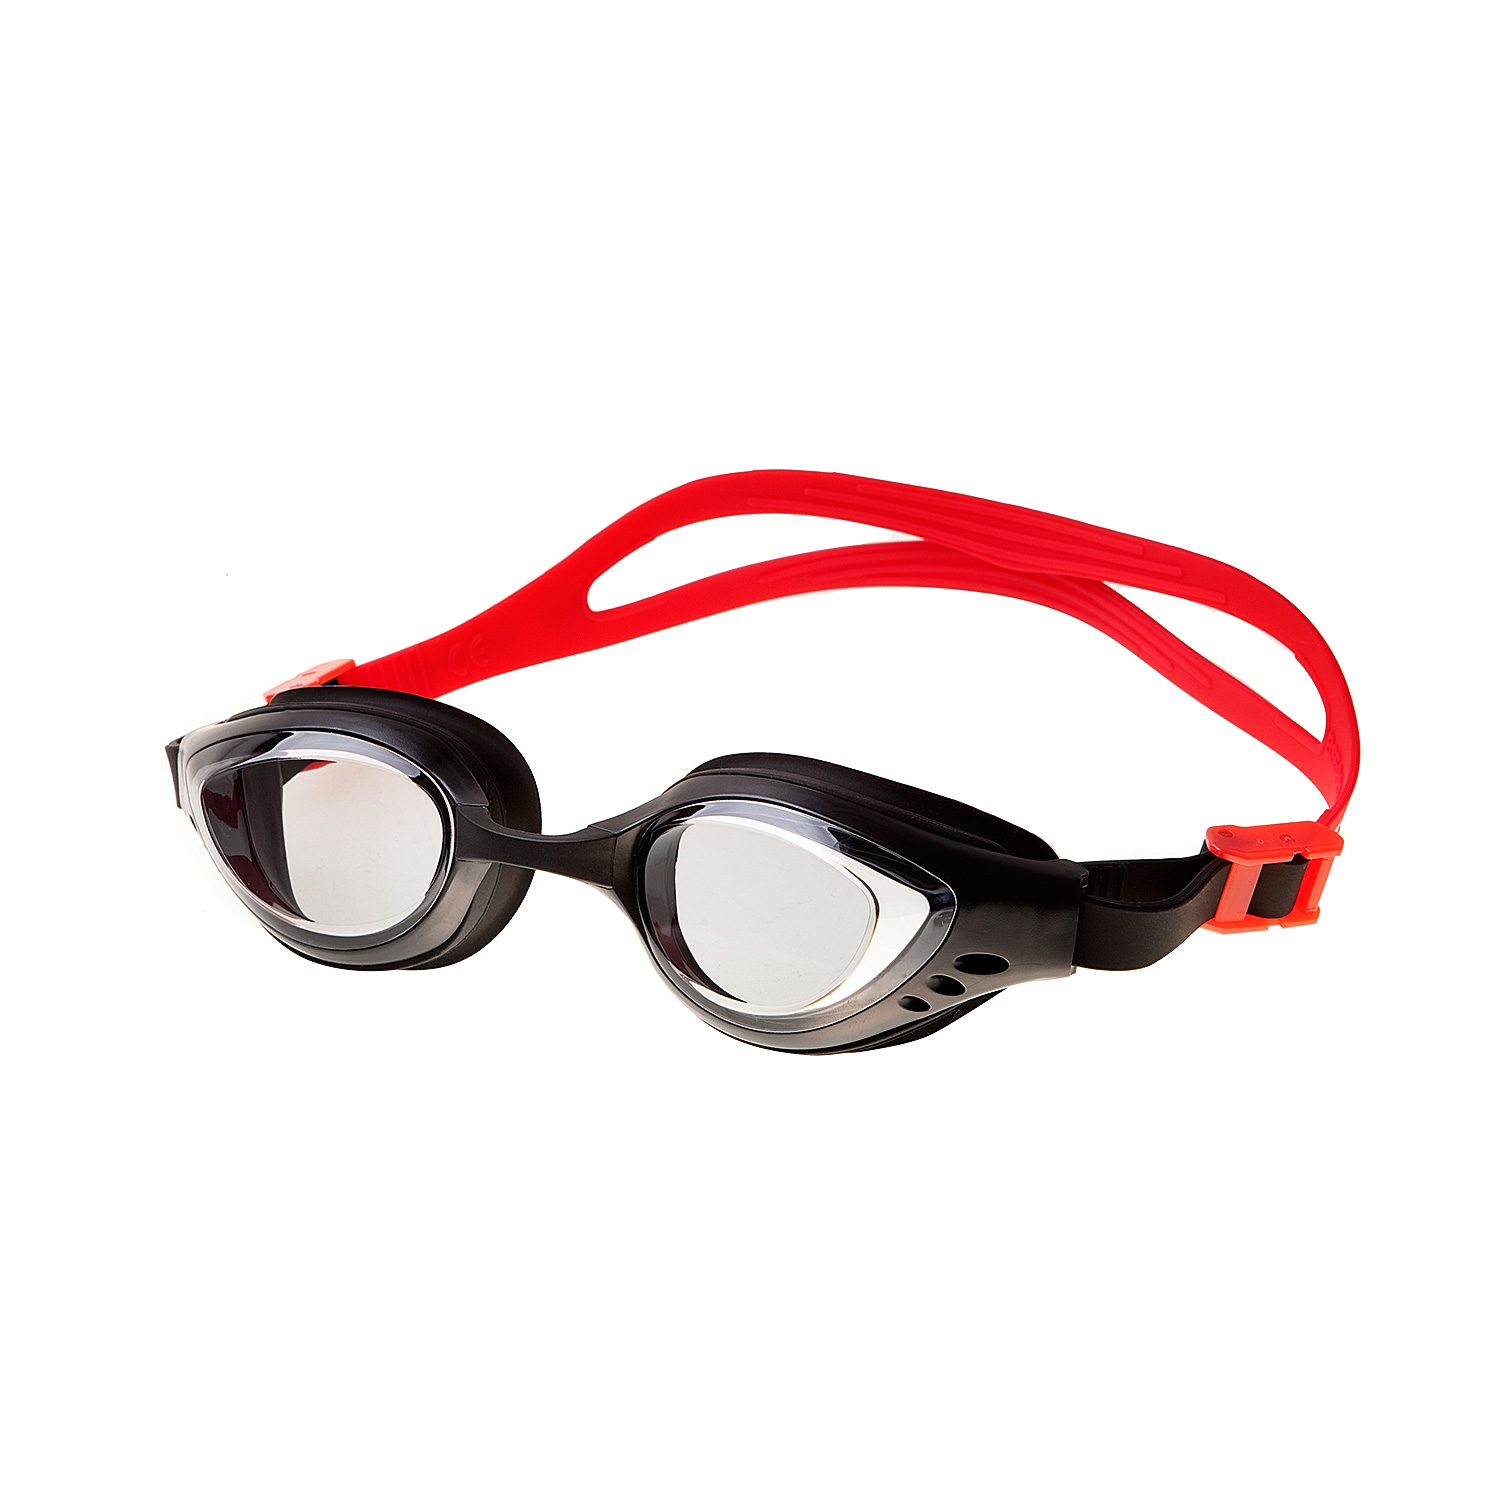 Очки для плавания Alpha Caprice AD-G193 black/red